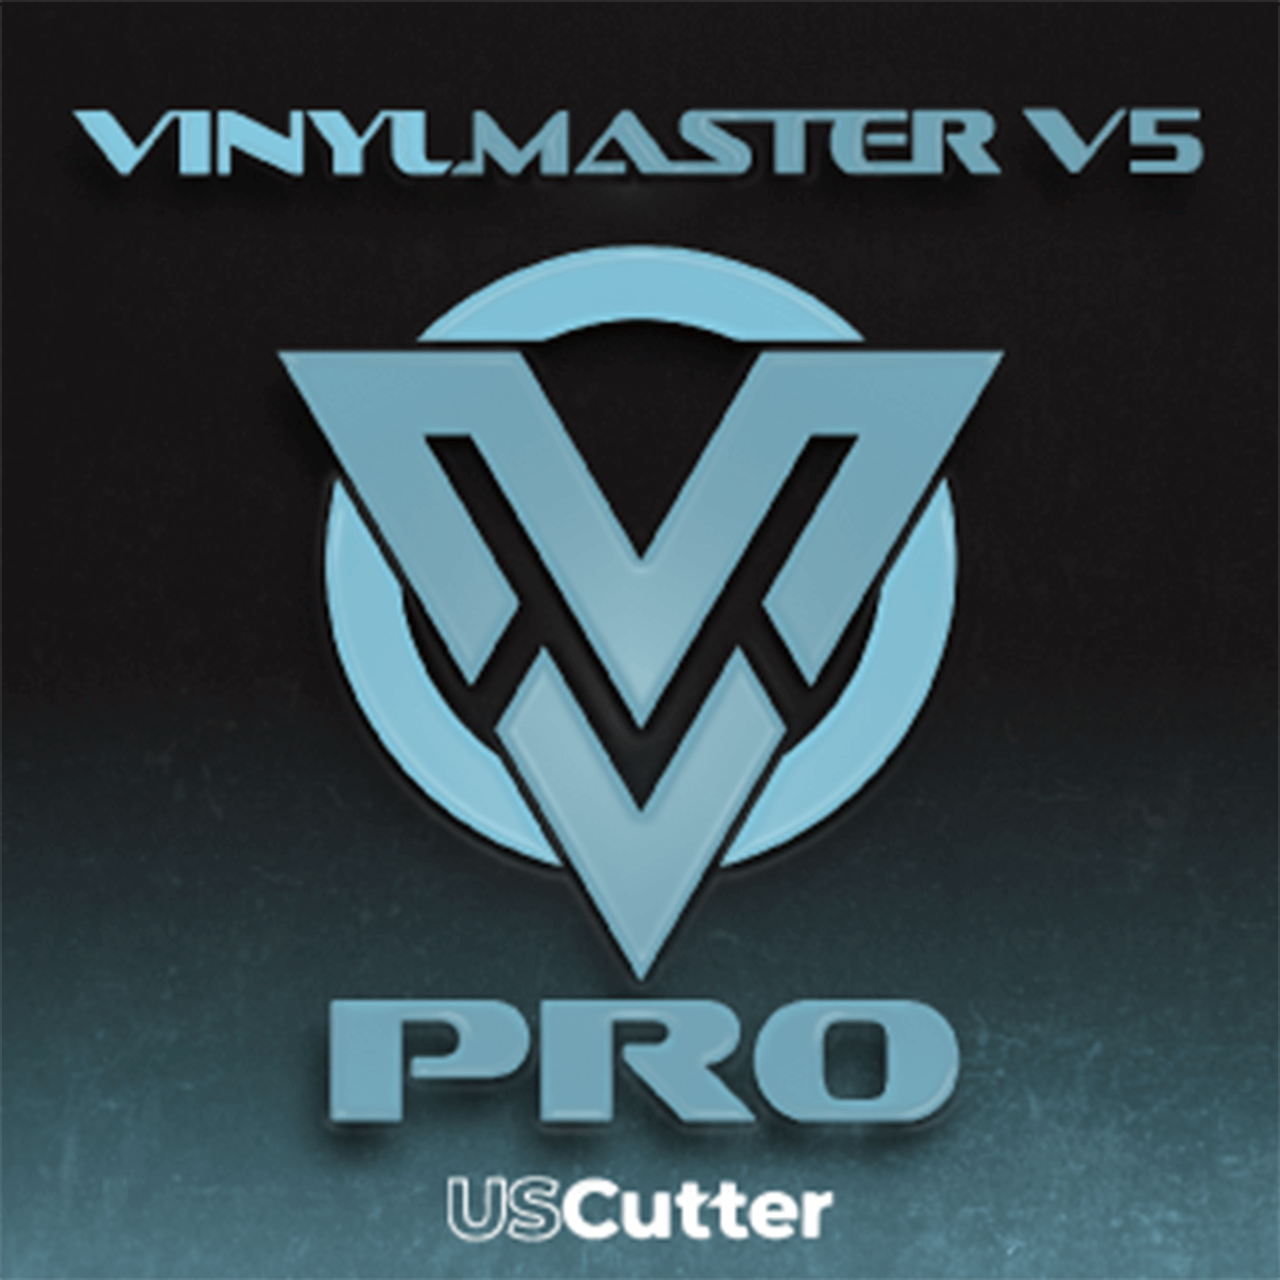 vinylmaster pro v4 owners manual